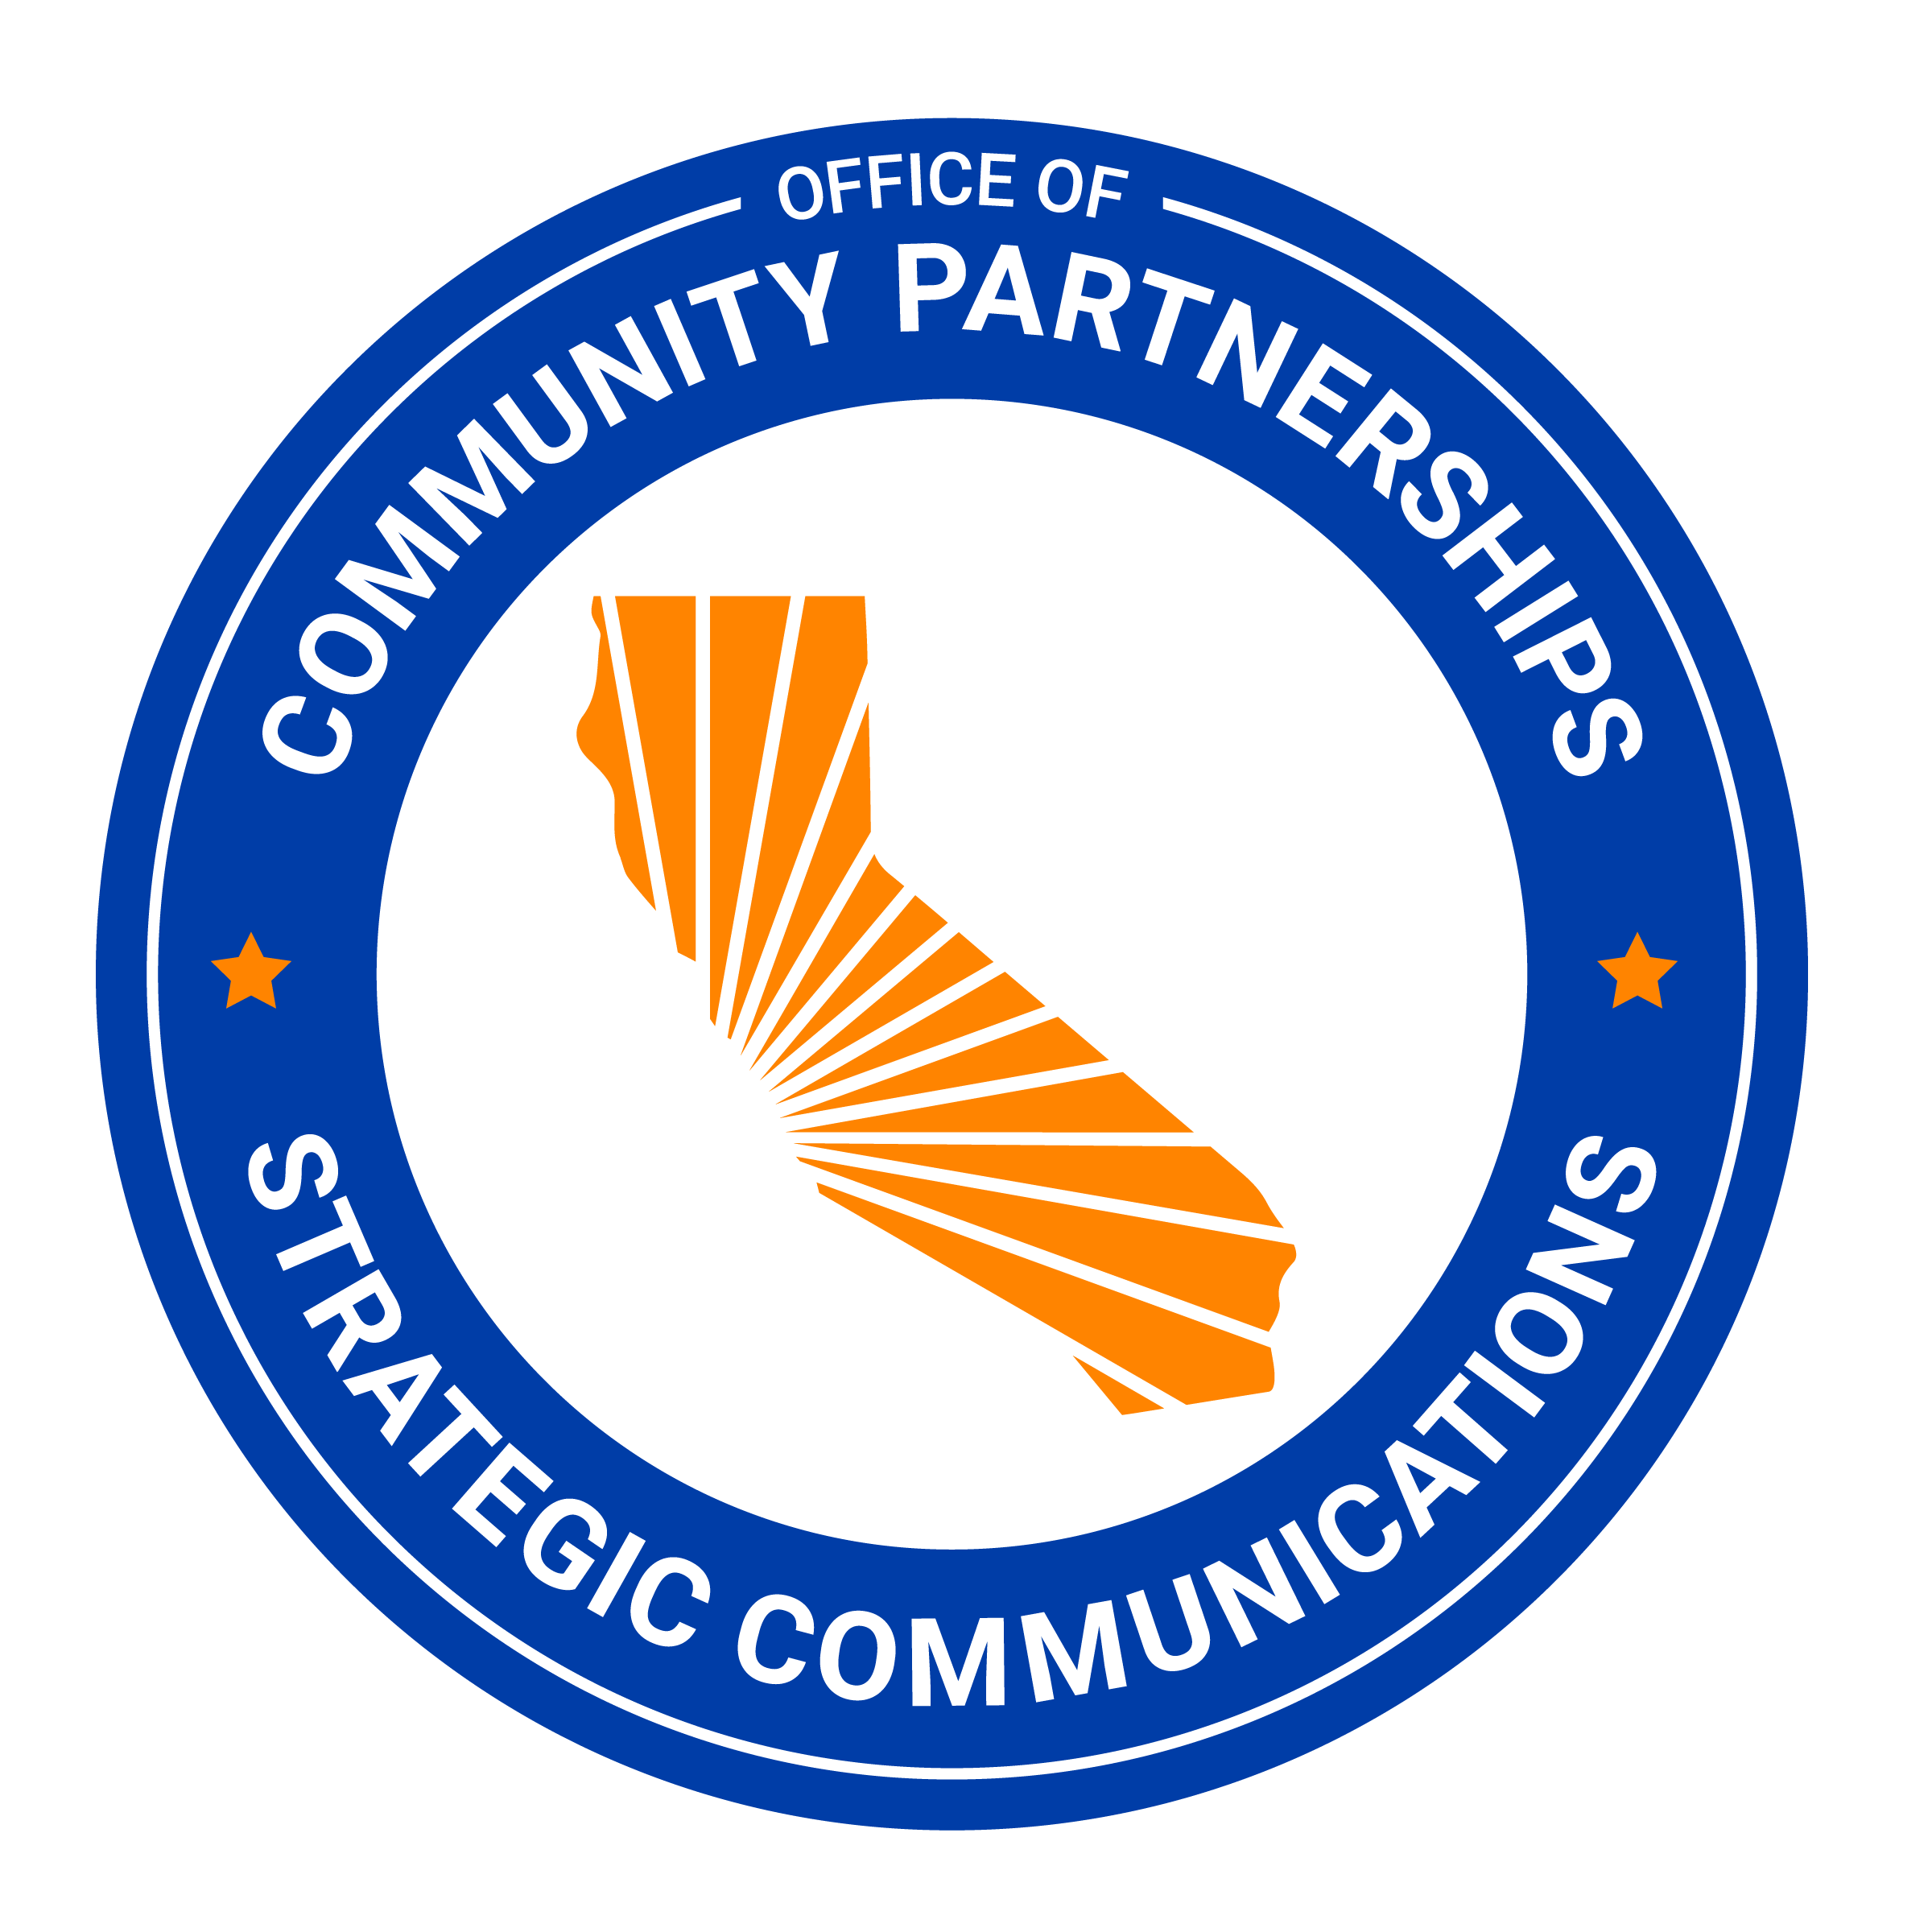 Office of Community Partnerships and Strategic Communications (OCPSC)